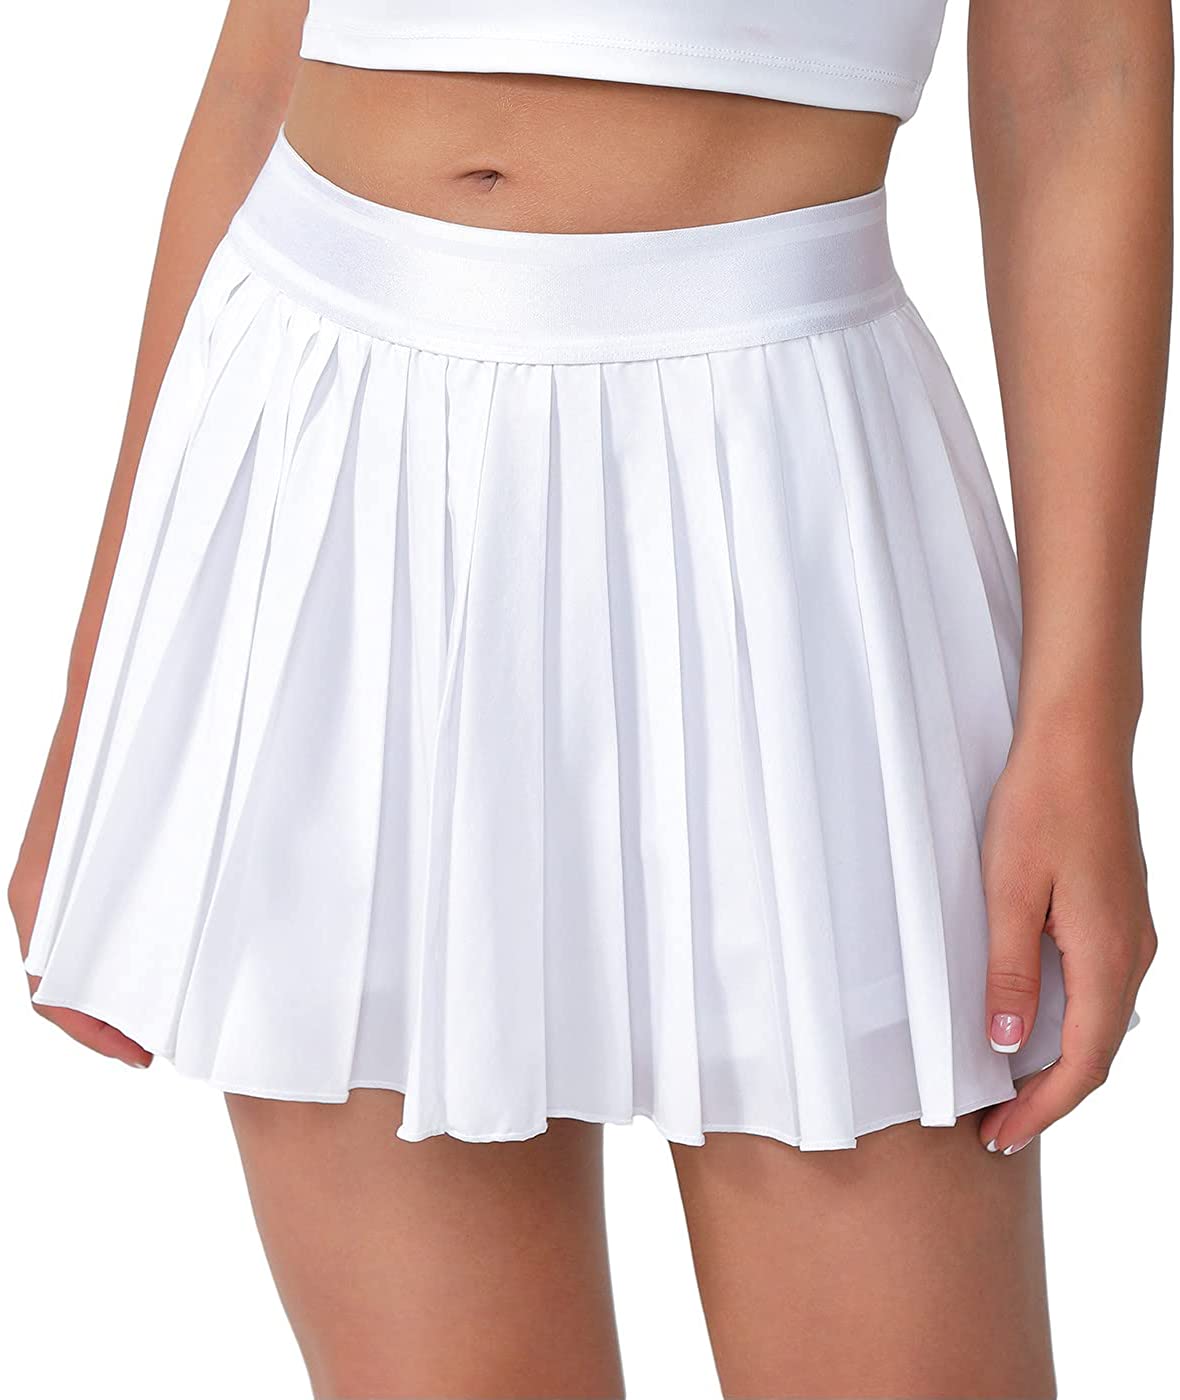 Eleloveph Women's 13in Pleated Tennis Skirt-Flowy Athletic Design,Suitable  for G | eBay